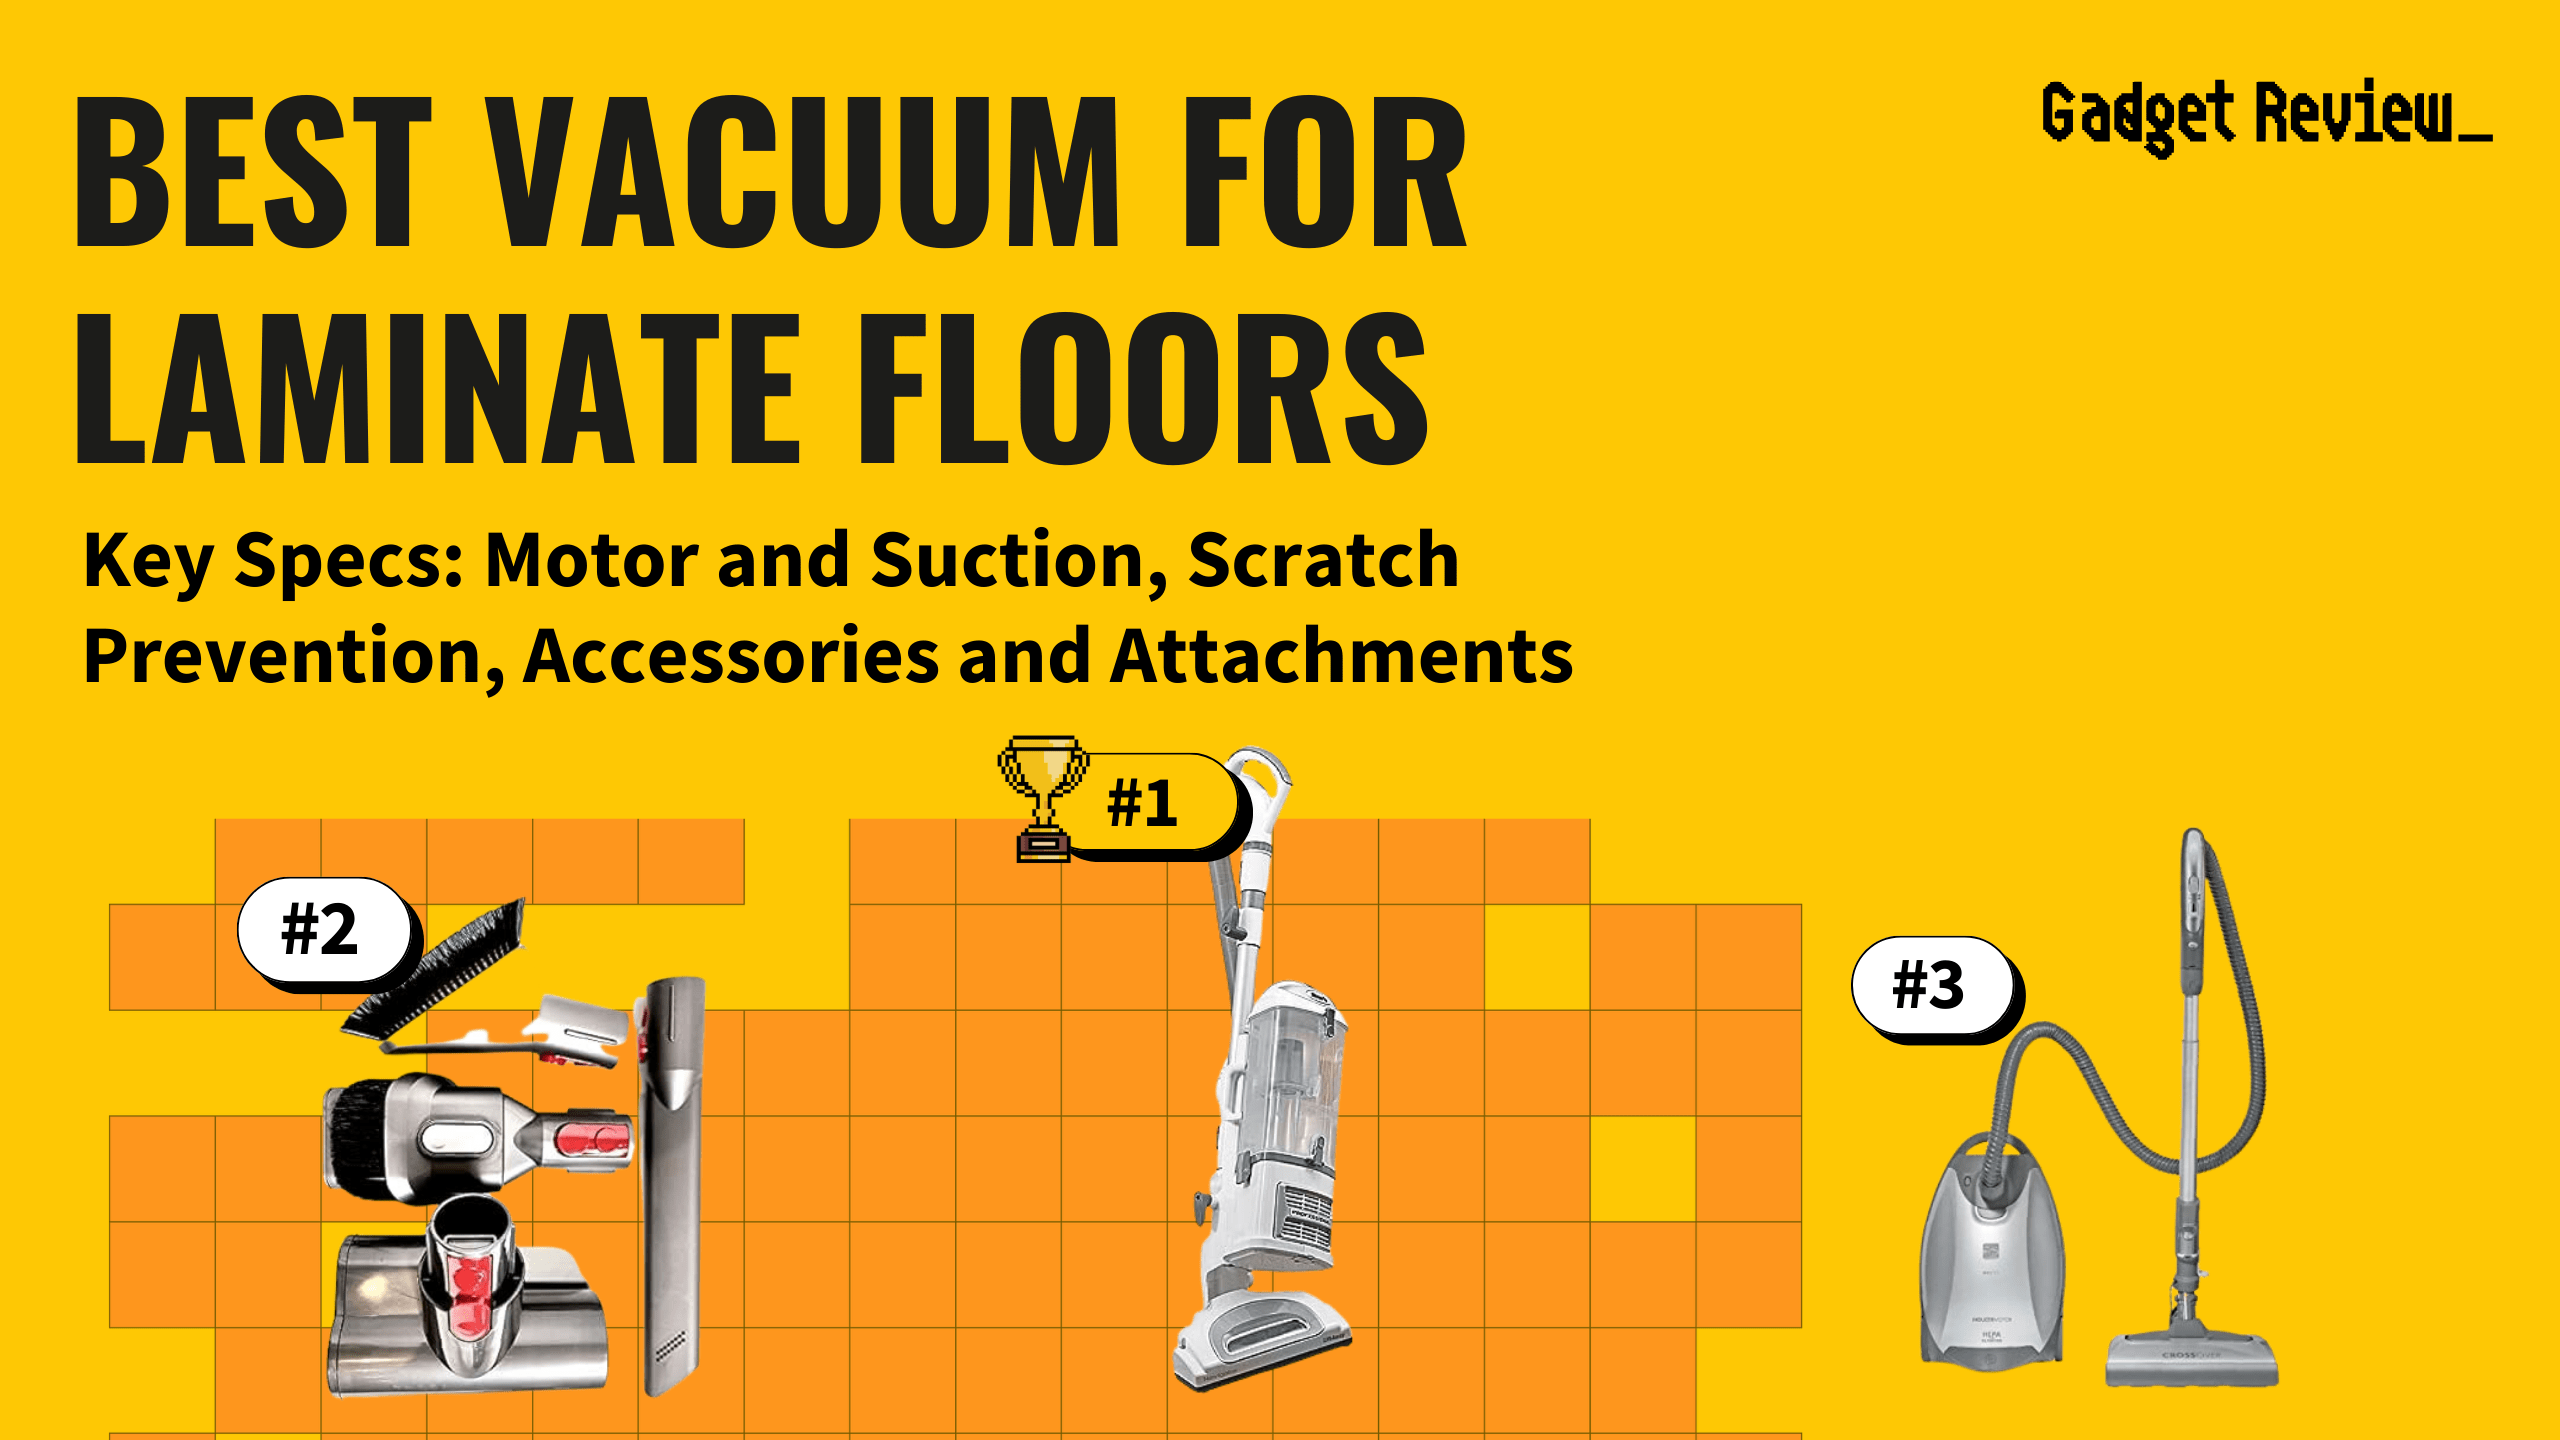 best vacuums laminate floors guide that shows the top best vacuum cleaner model